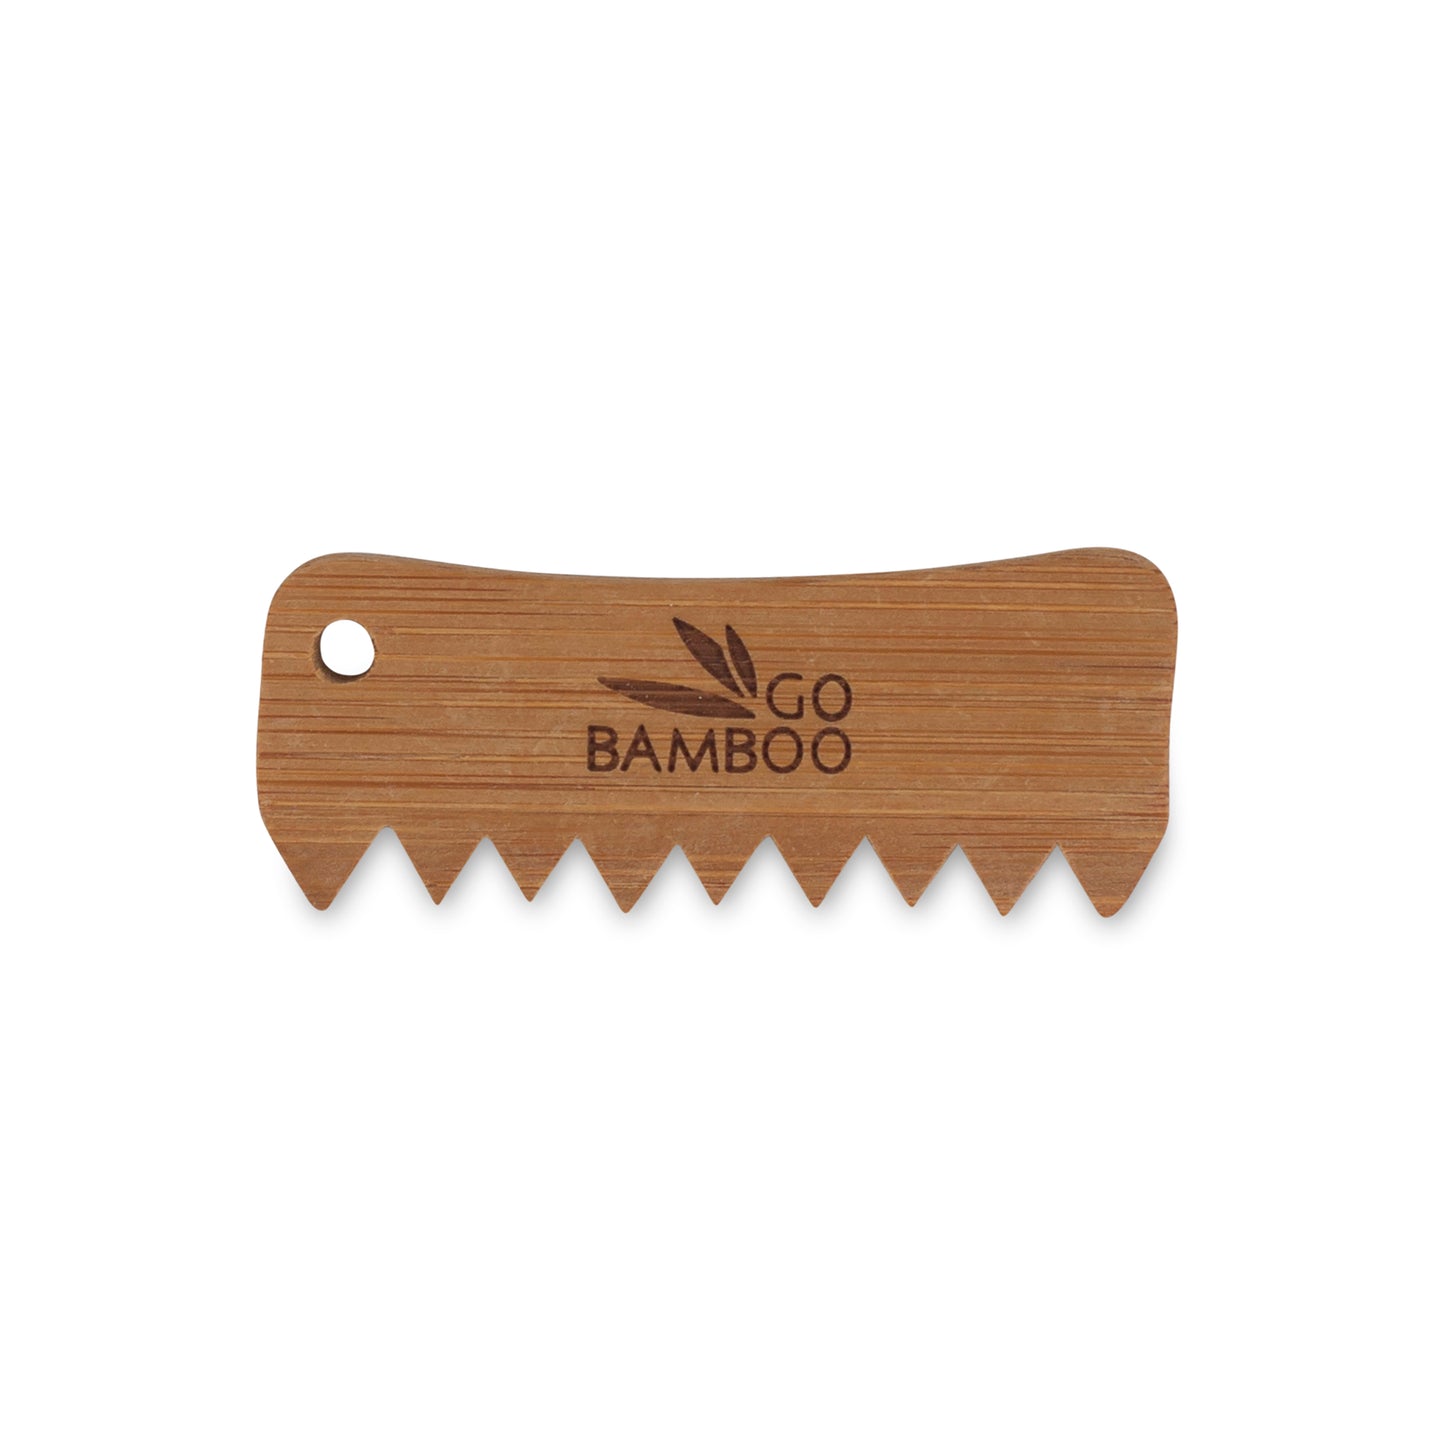 Bamboo Wood Comb - Surf Wax Comb - Go Bamboo